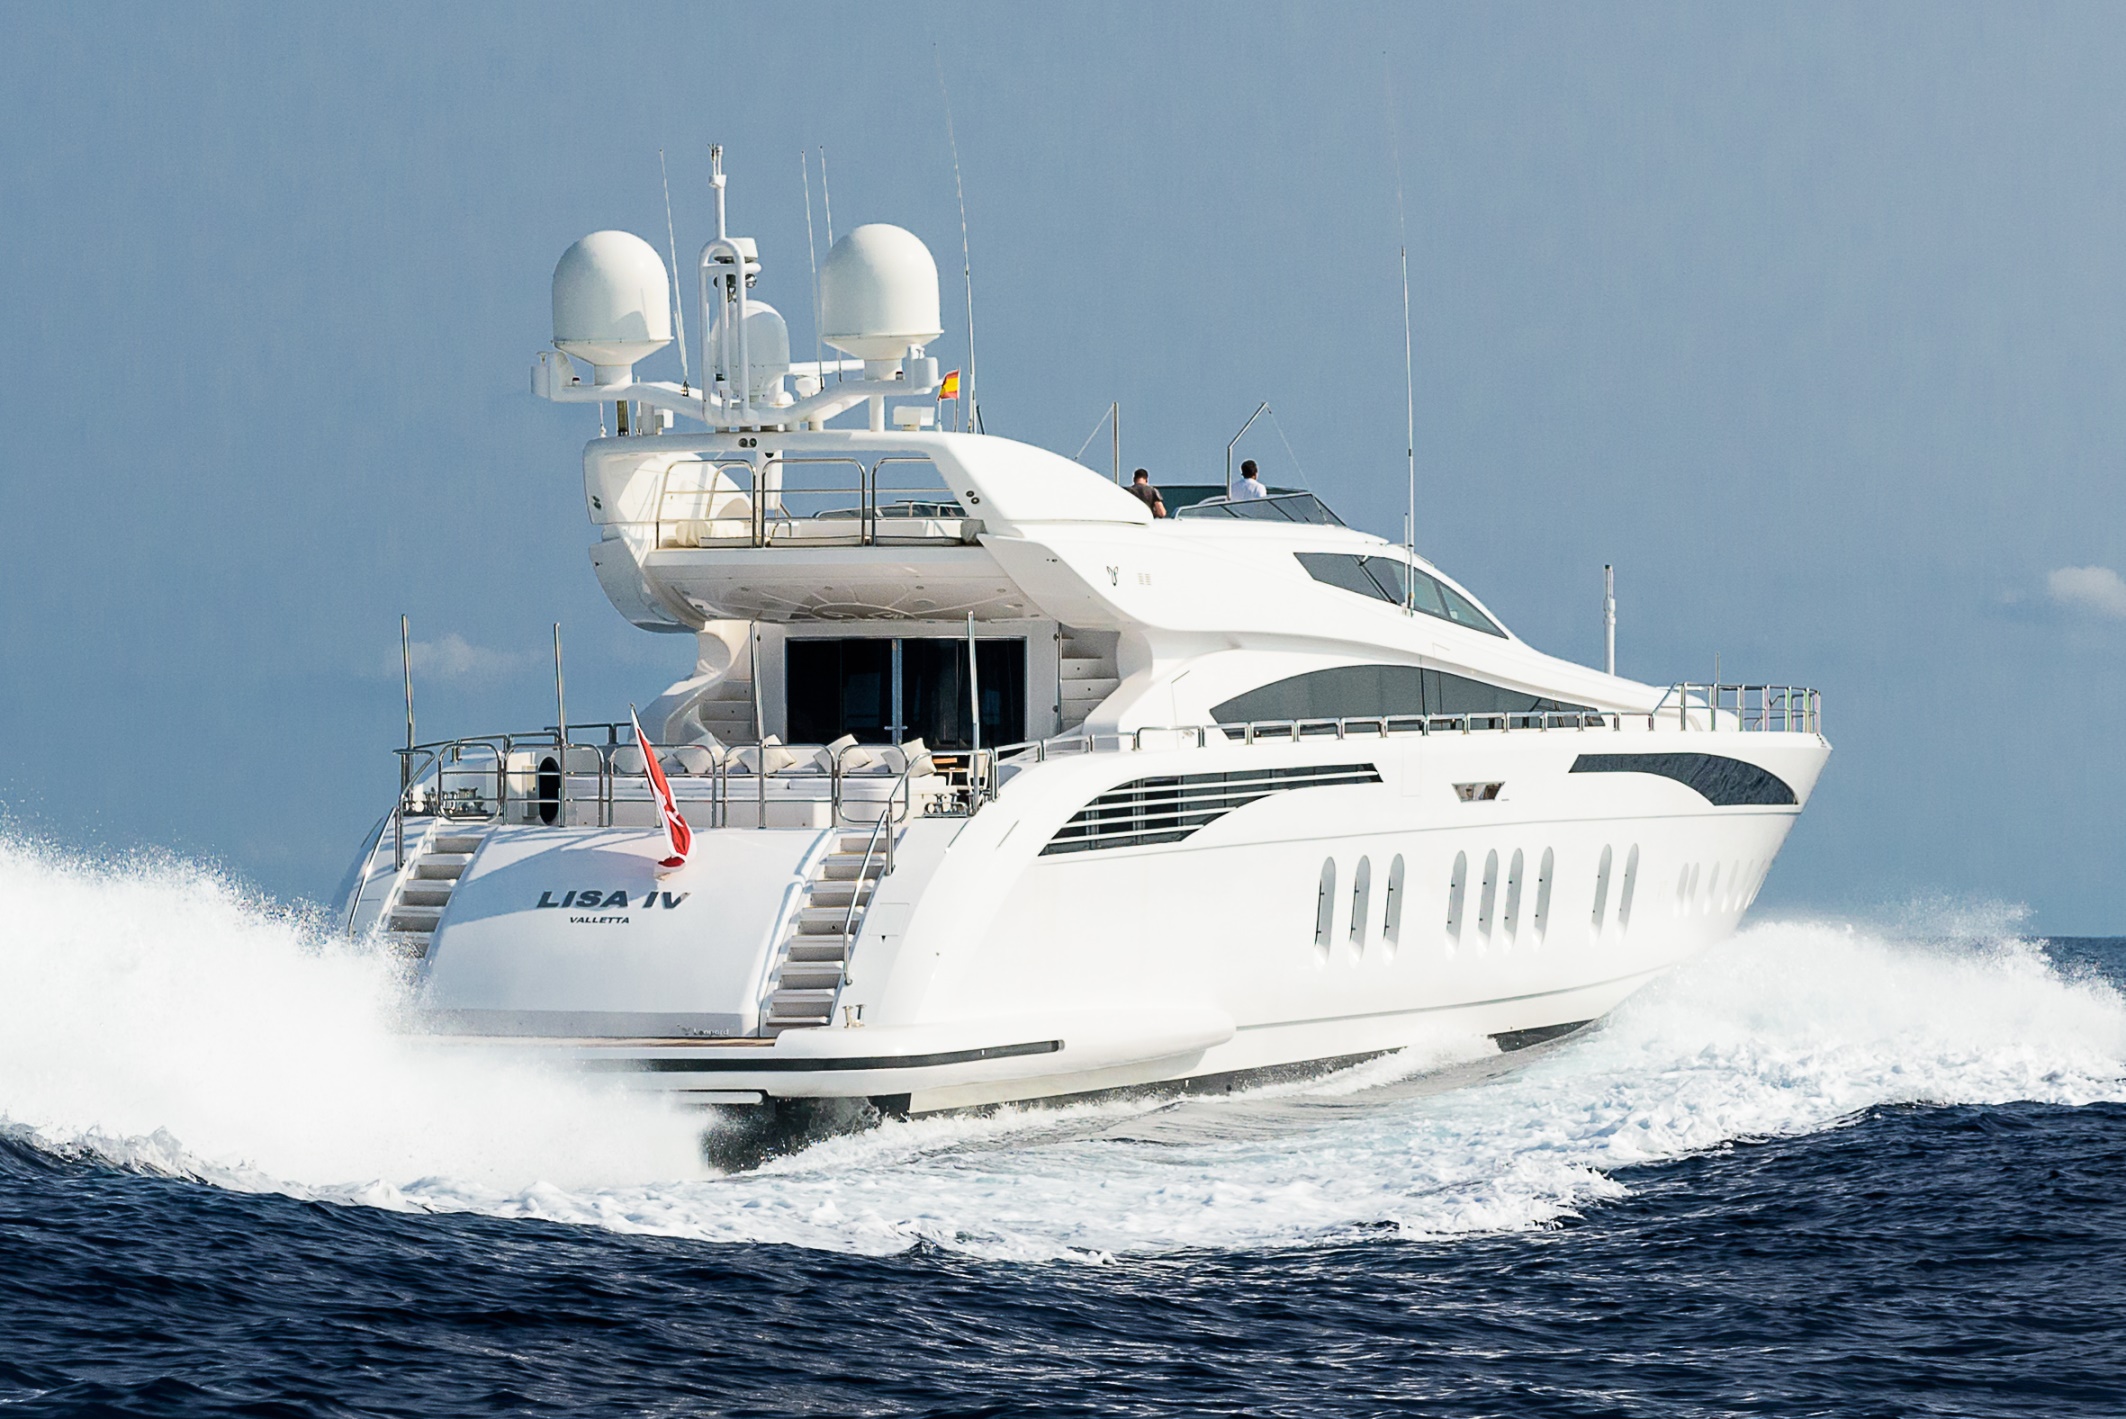 Leopard Yacht LISA IV - Cruising